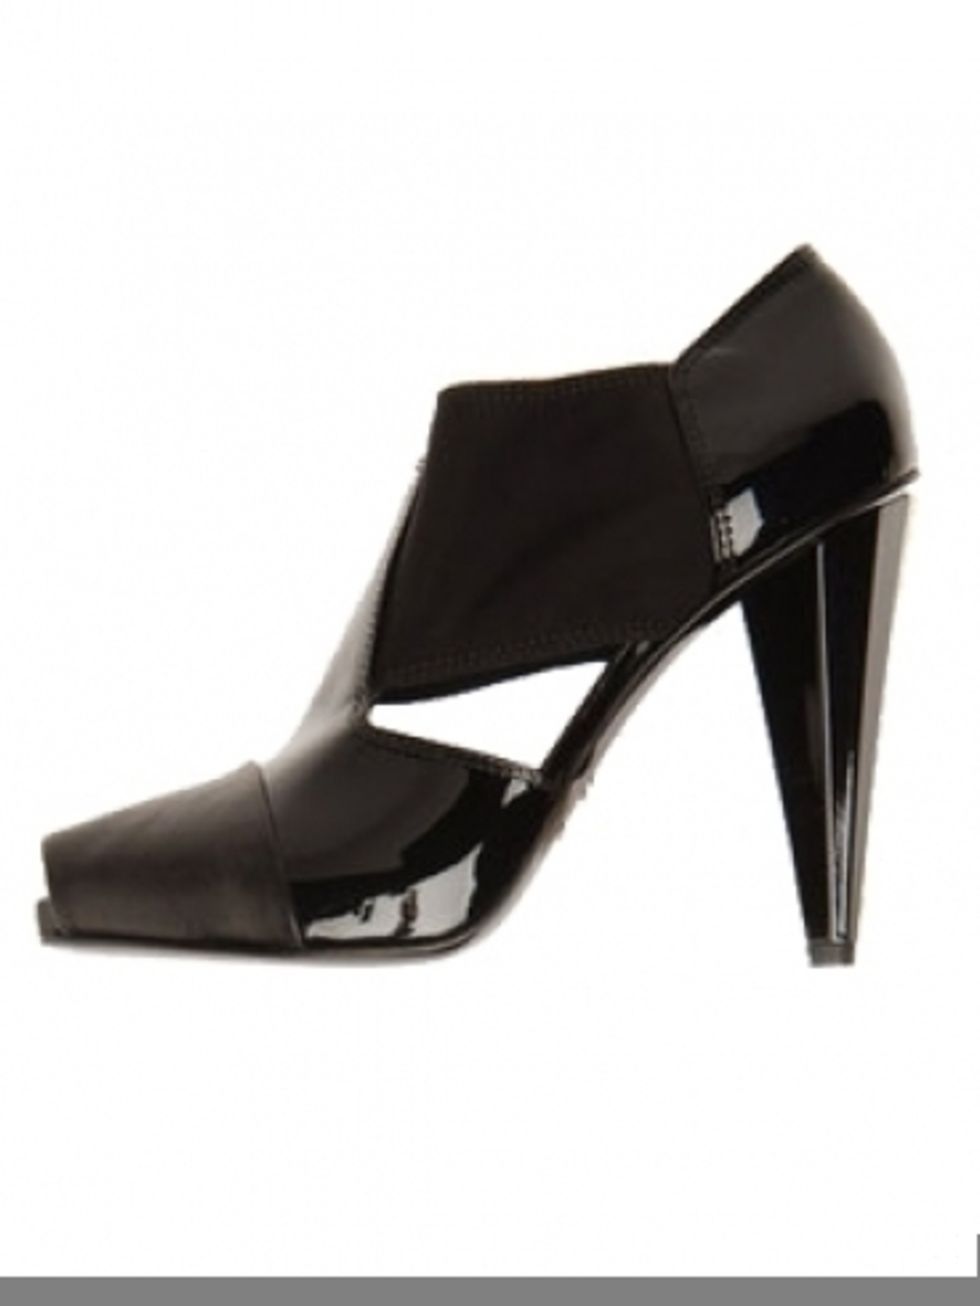 Footwear, High heels, Product, Brown, White, Sandal, Basic pump, Fashion, Black, Leather, 